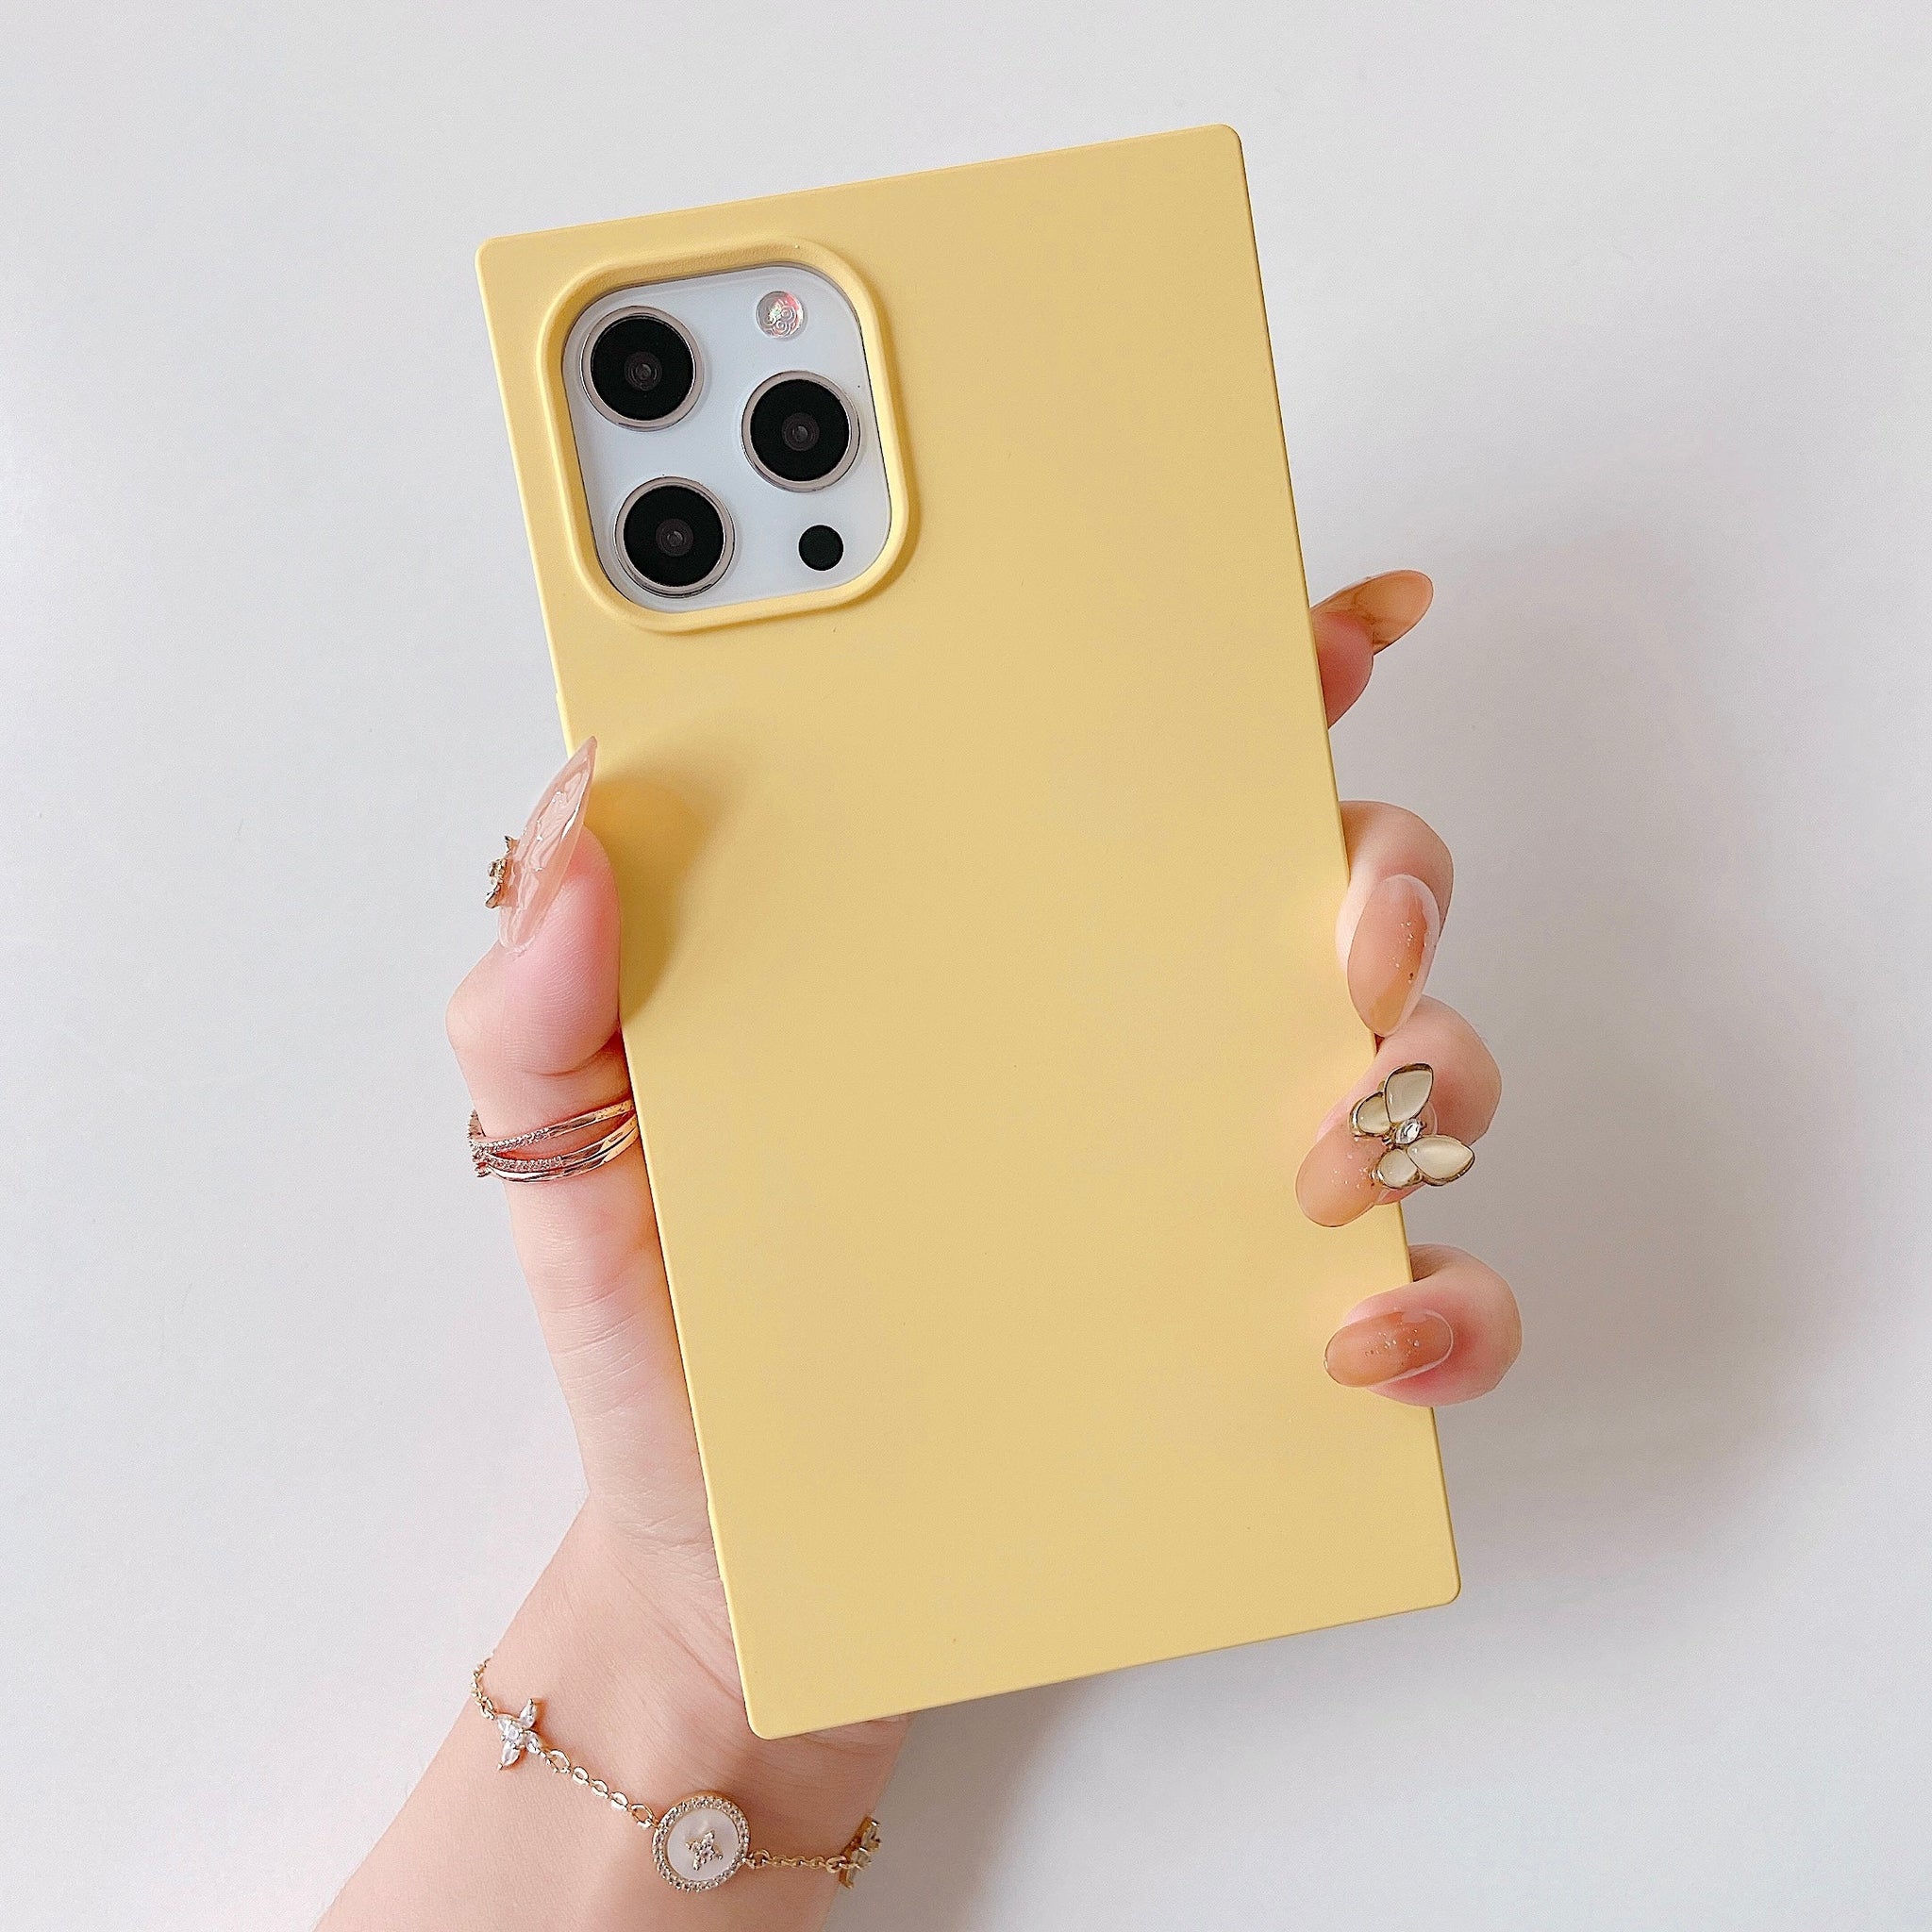 iPhone 11 Pro Max Case Square Silicone (Yellow)